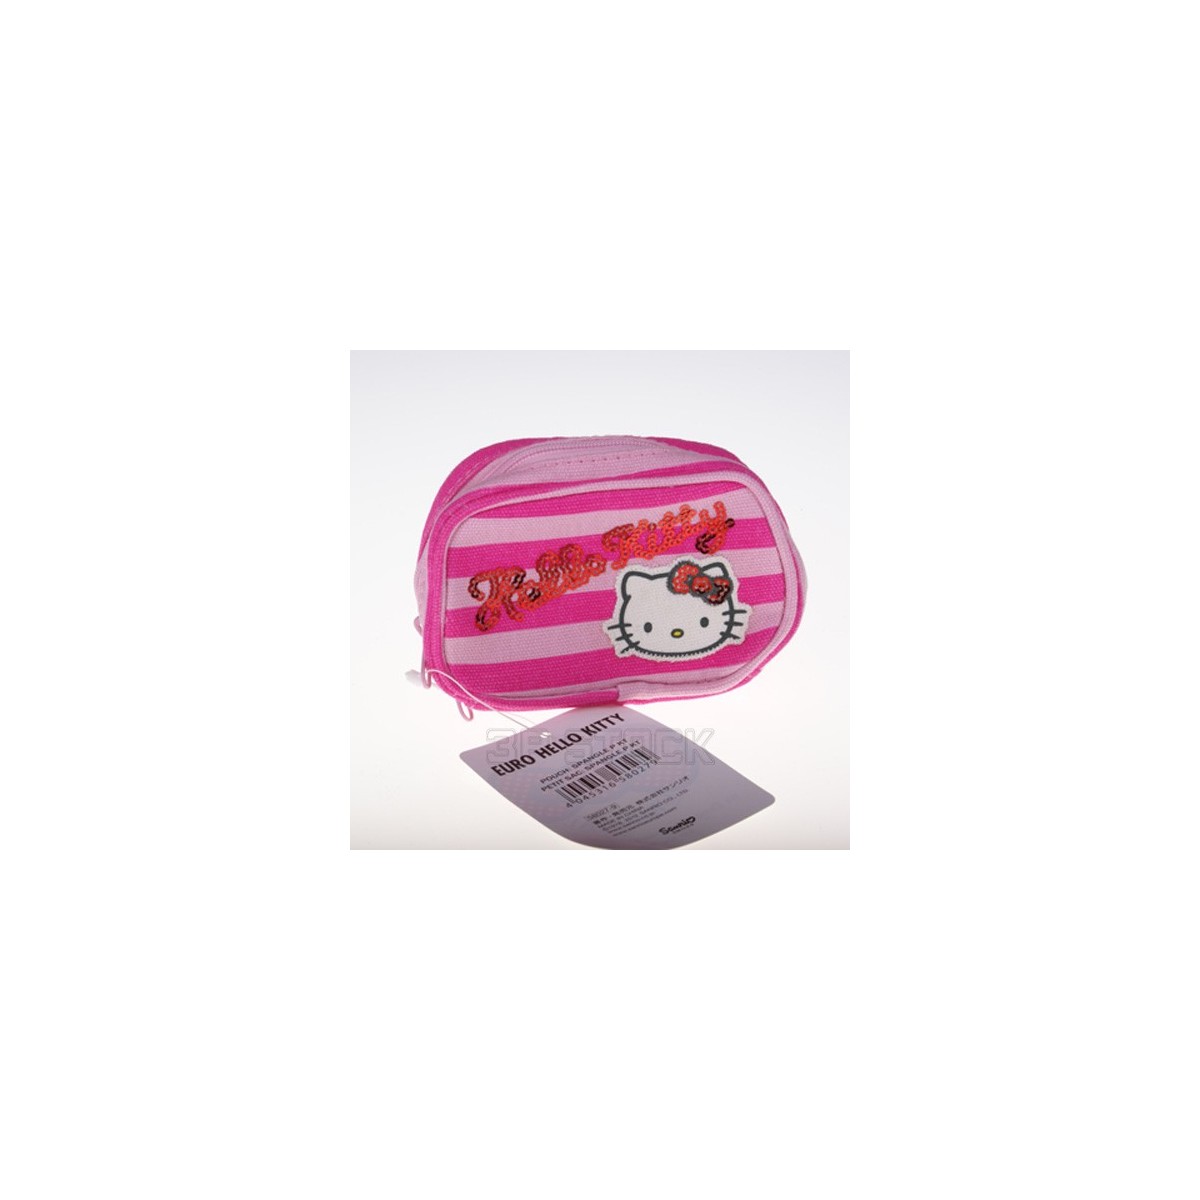 Hello Kitty Spangle P KT astuccio con zip case with zip